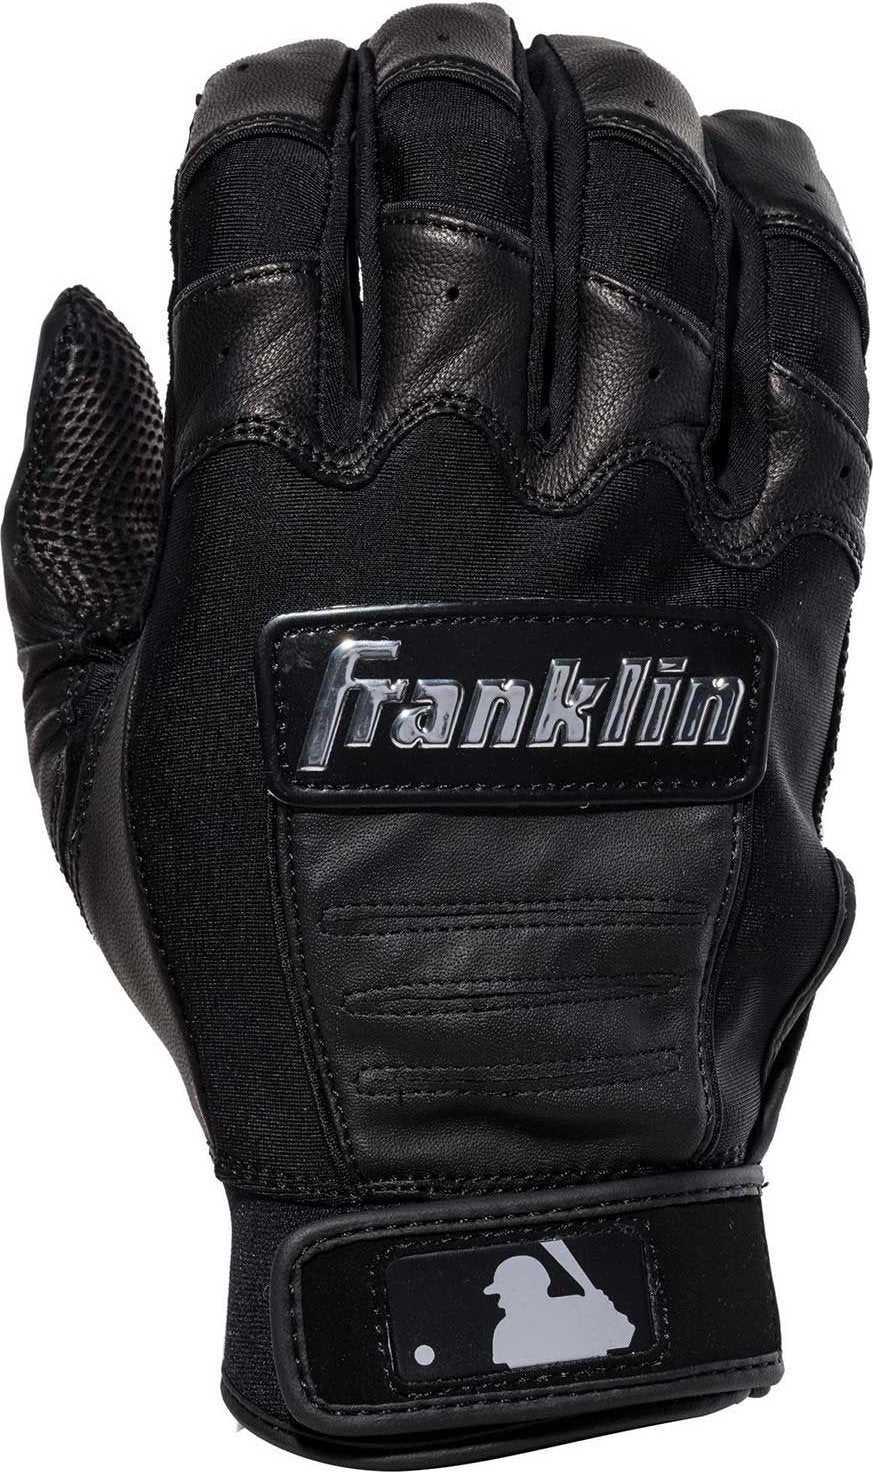 Franklin CFX Pro Chrome Adult Batting Gloves - Black - HIT a Double